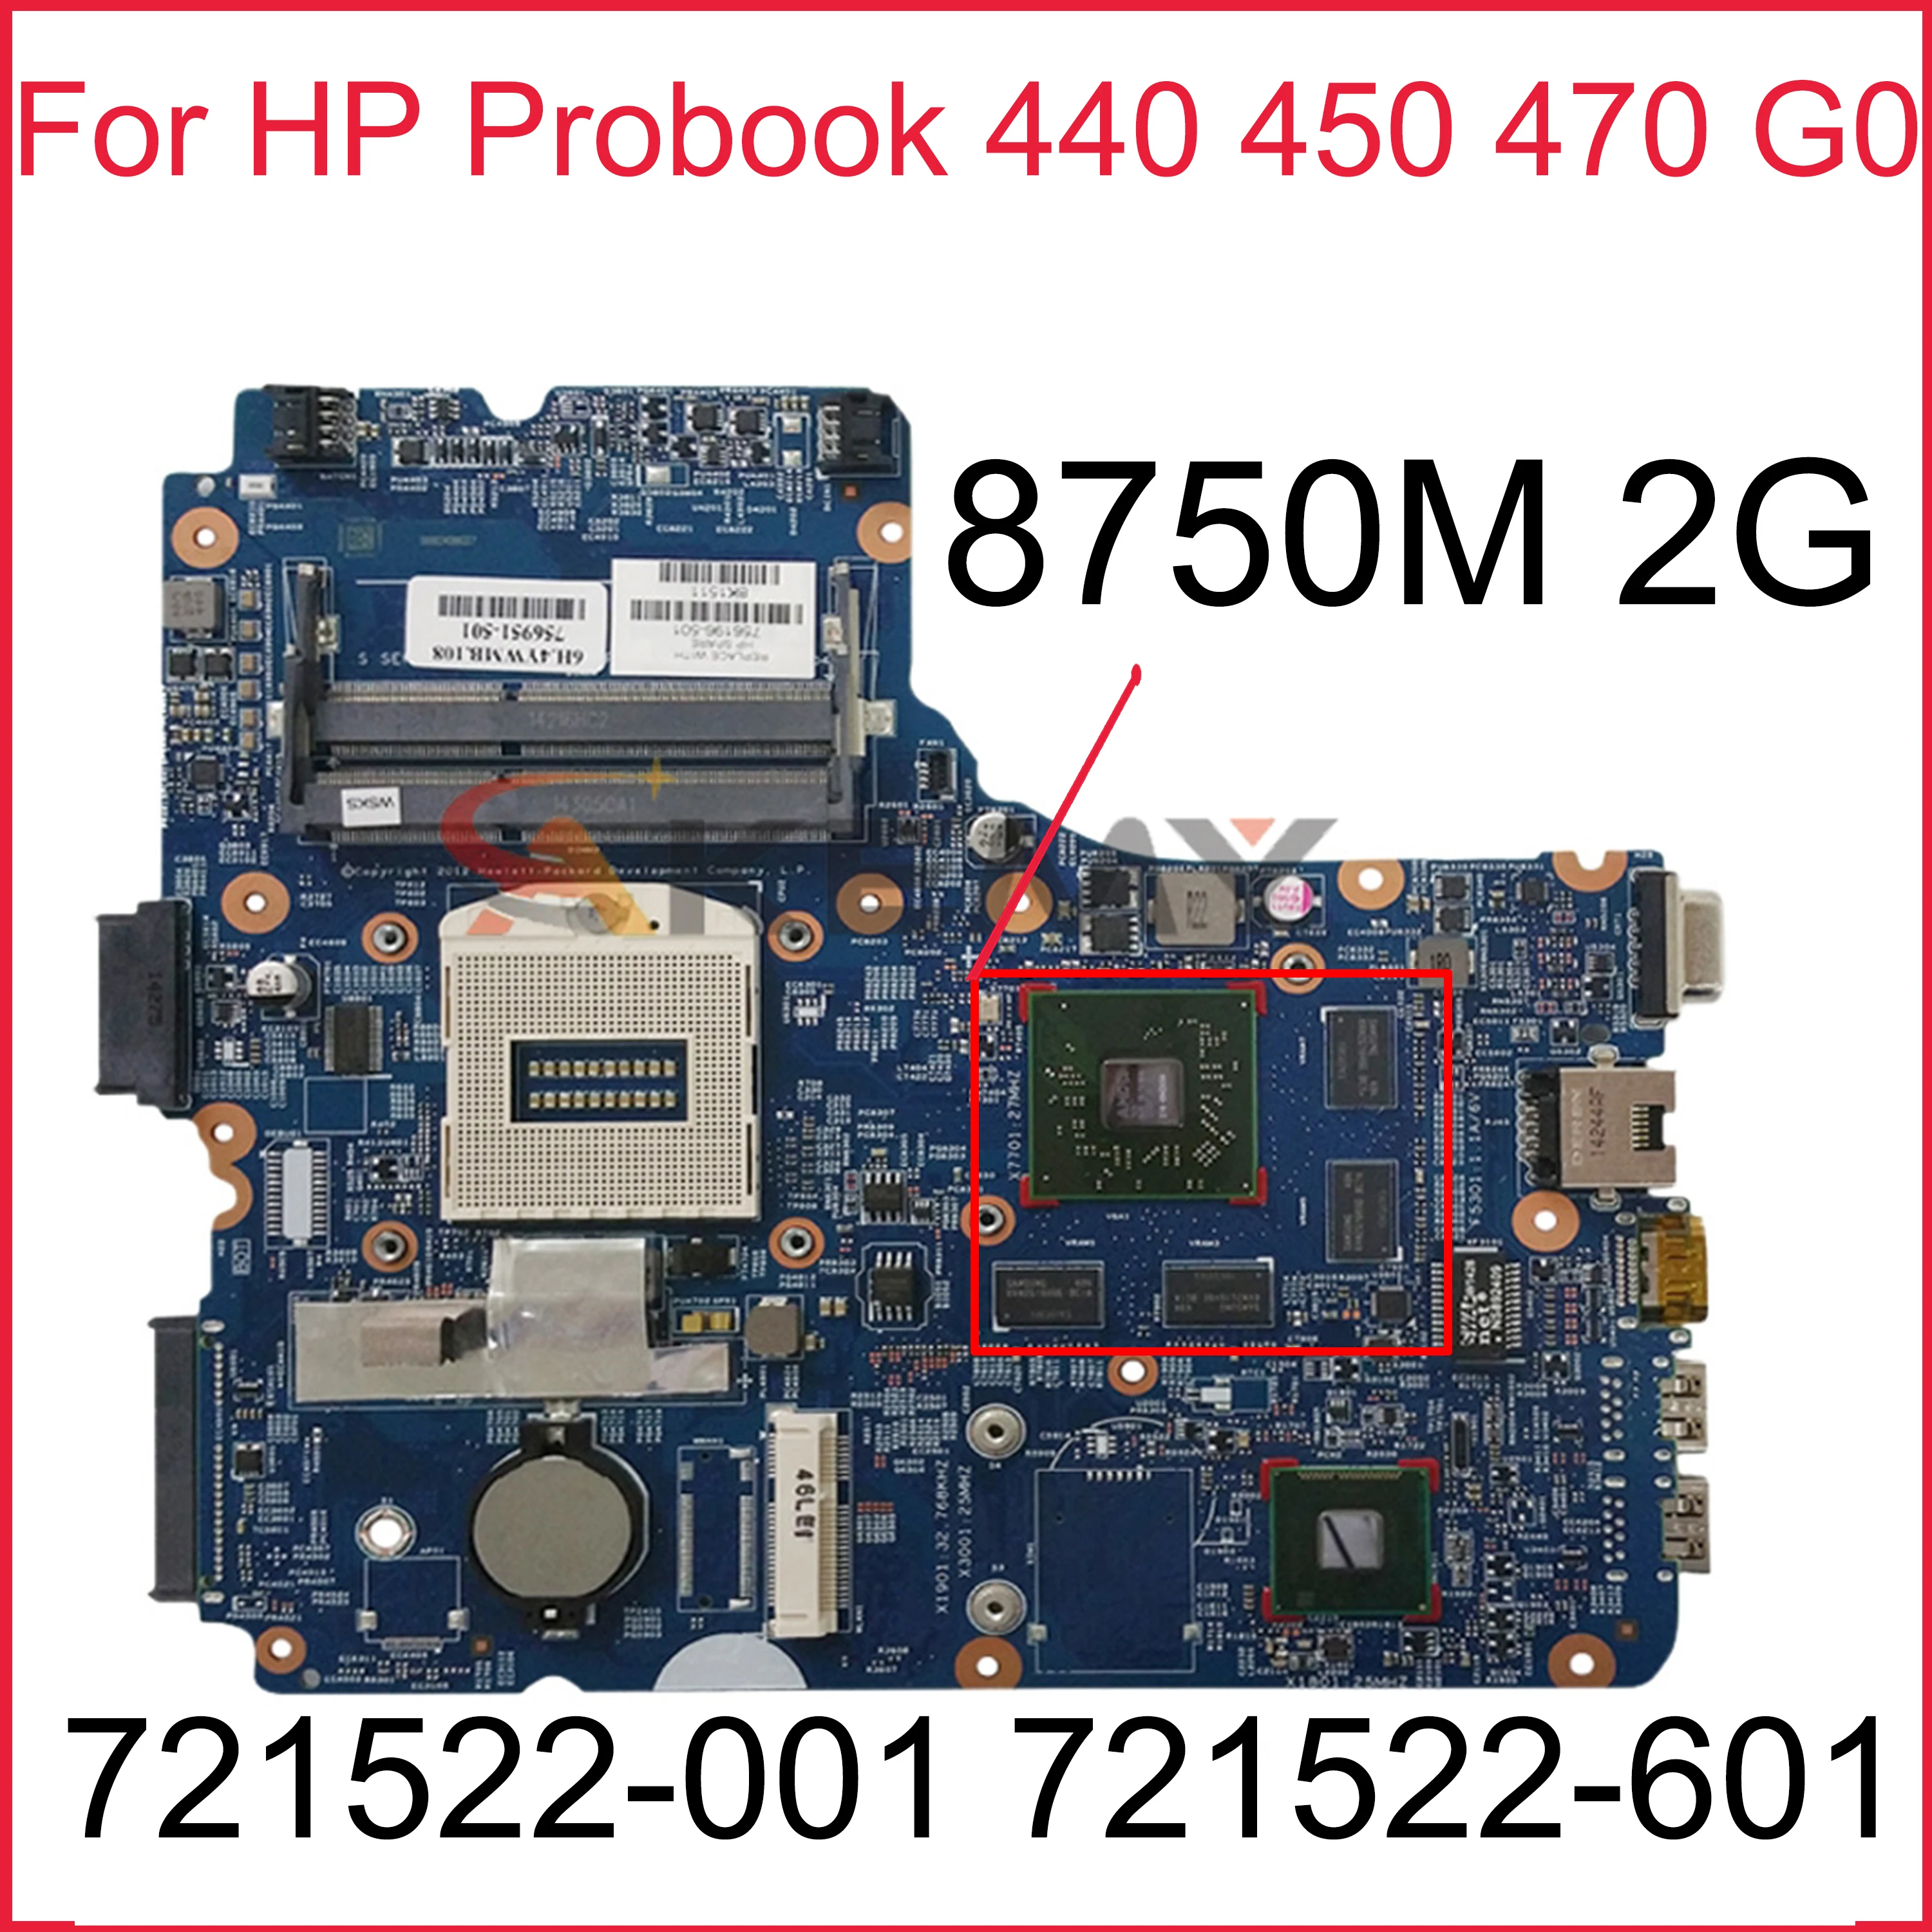 

721522-001 721522-601 721522-501 for HP Probook 440 450 470 G0 laptop motherboard 12238-1 8750M 2G SLJ8E 216-0842000 DDR3 normal